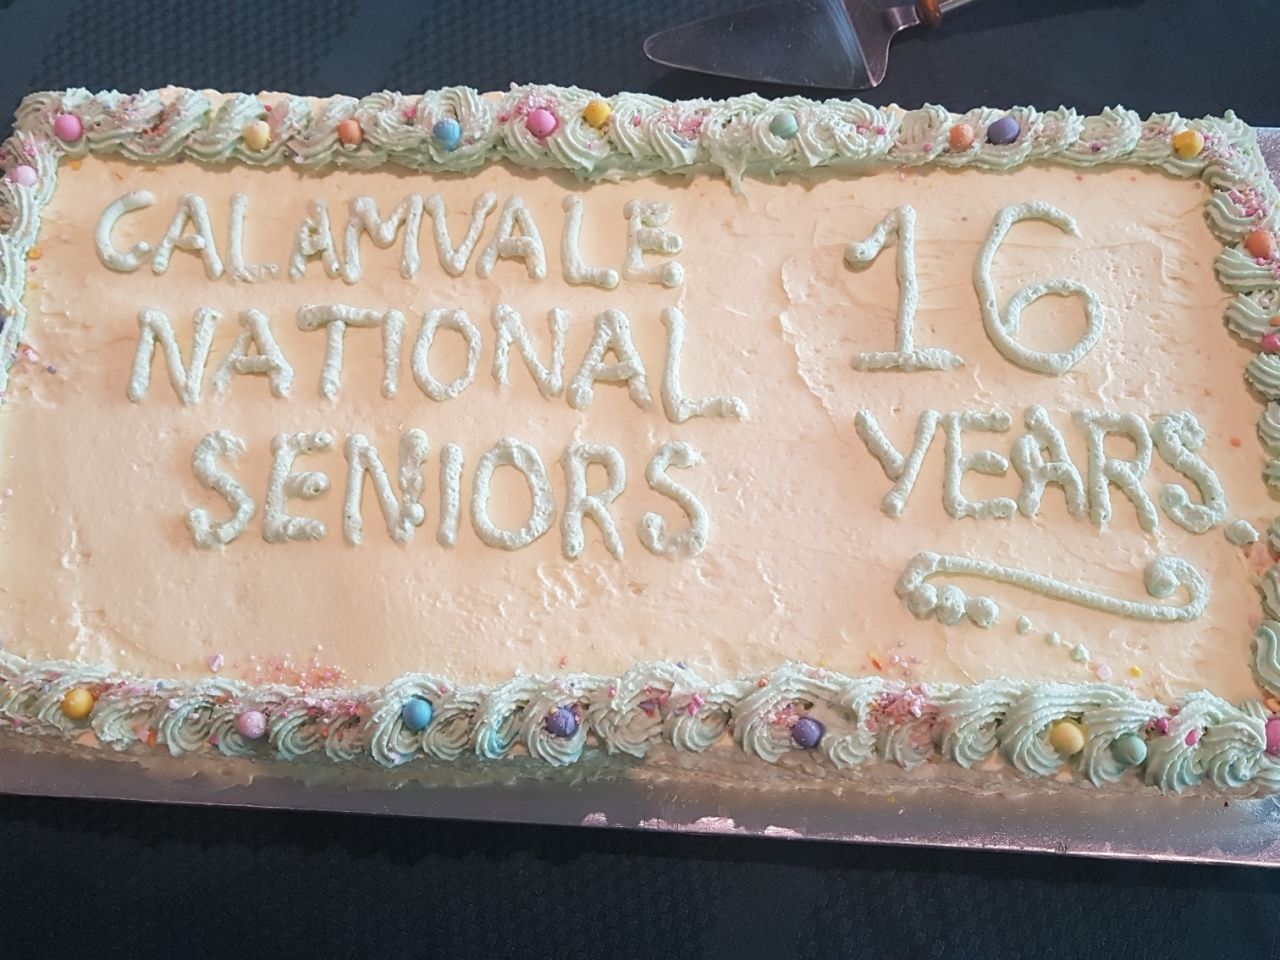 Birthday Cake for Calamvale's 16th birthday celebration